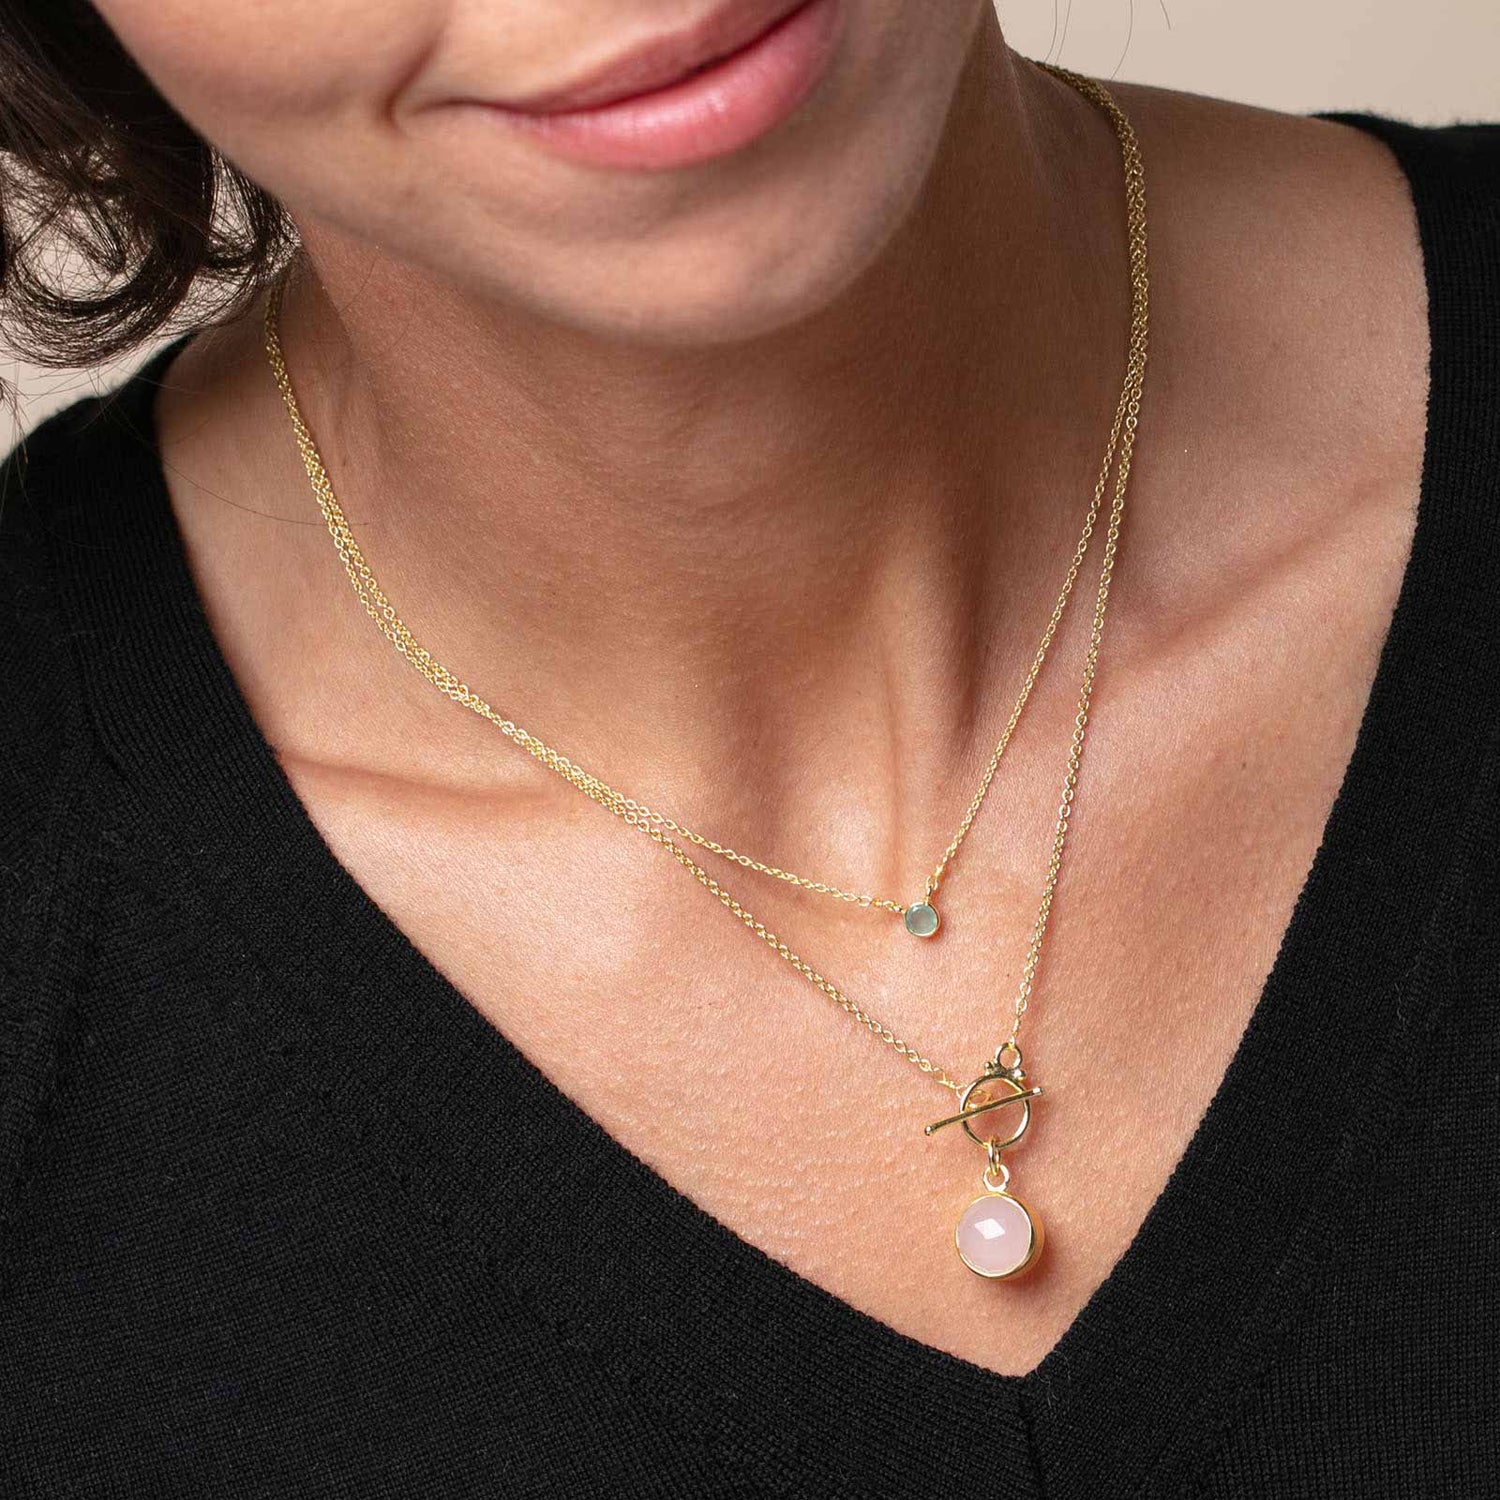 Faceted Rose Quartz Pendant Necklace, 16” - Gold Plated Necklace - rockflowerpaper